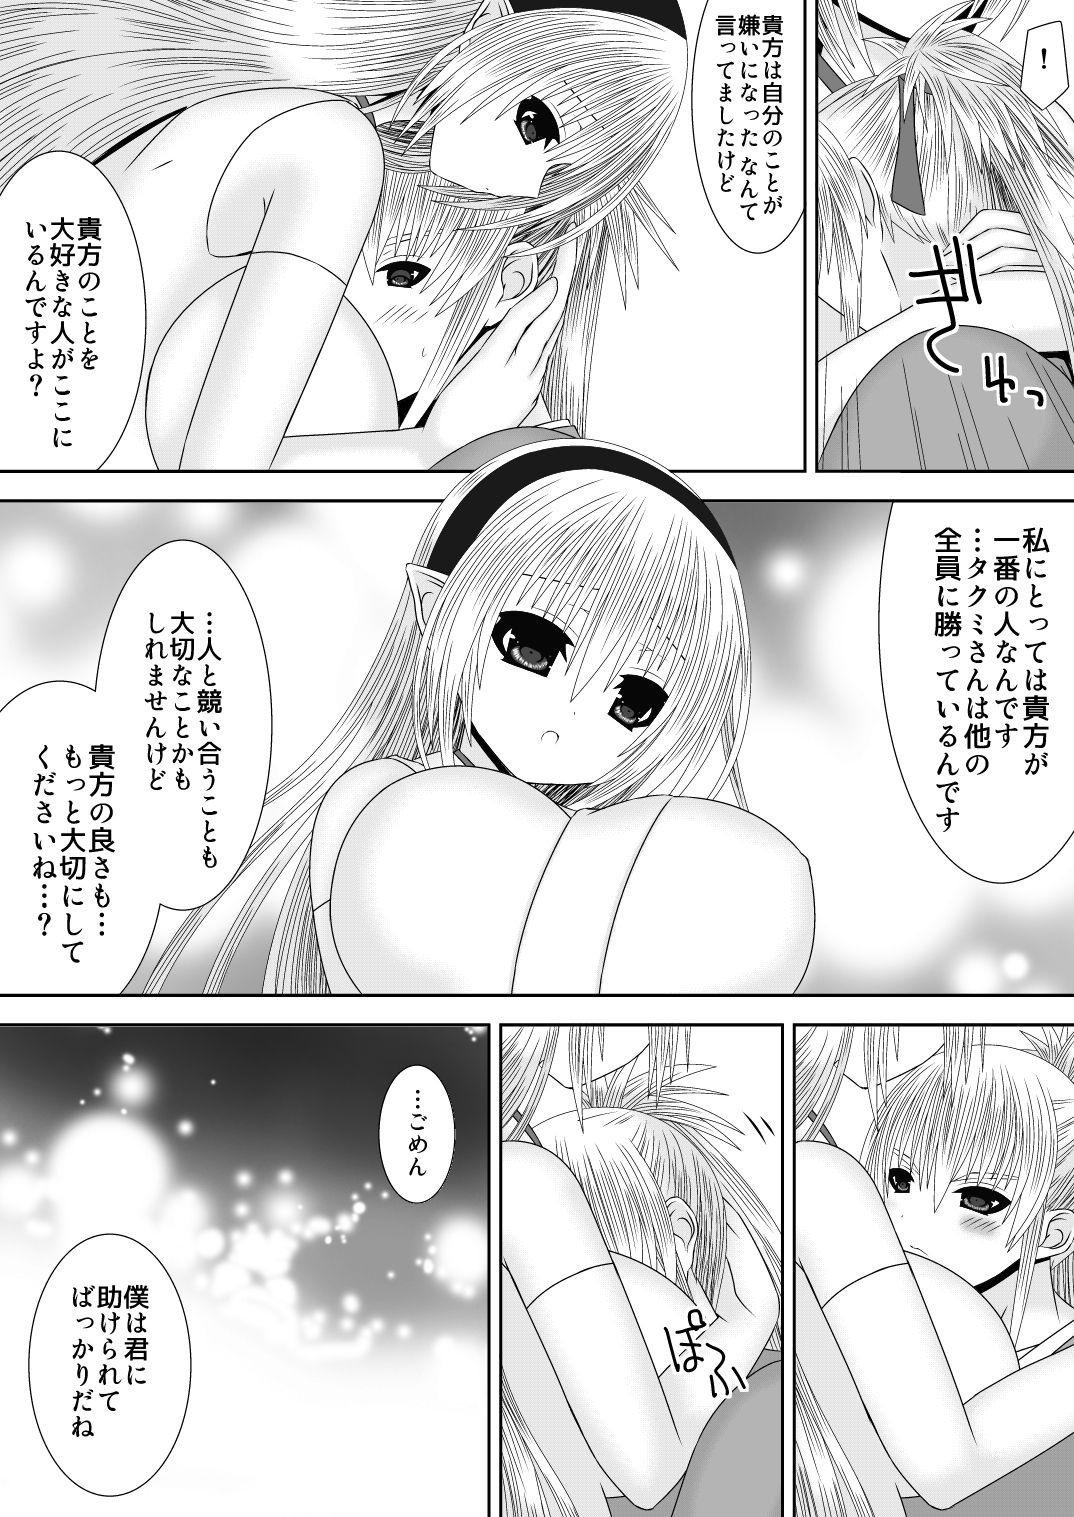 Skirt Takumi-kun wa, Sunao ni narenai. - Fire emblem if Lover - Page 7